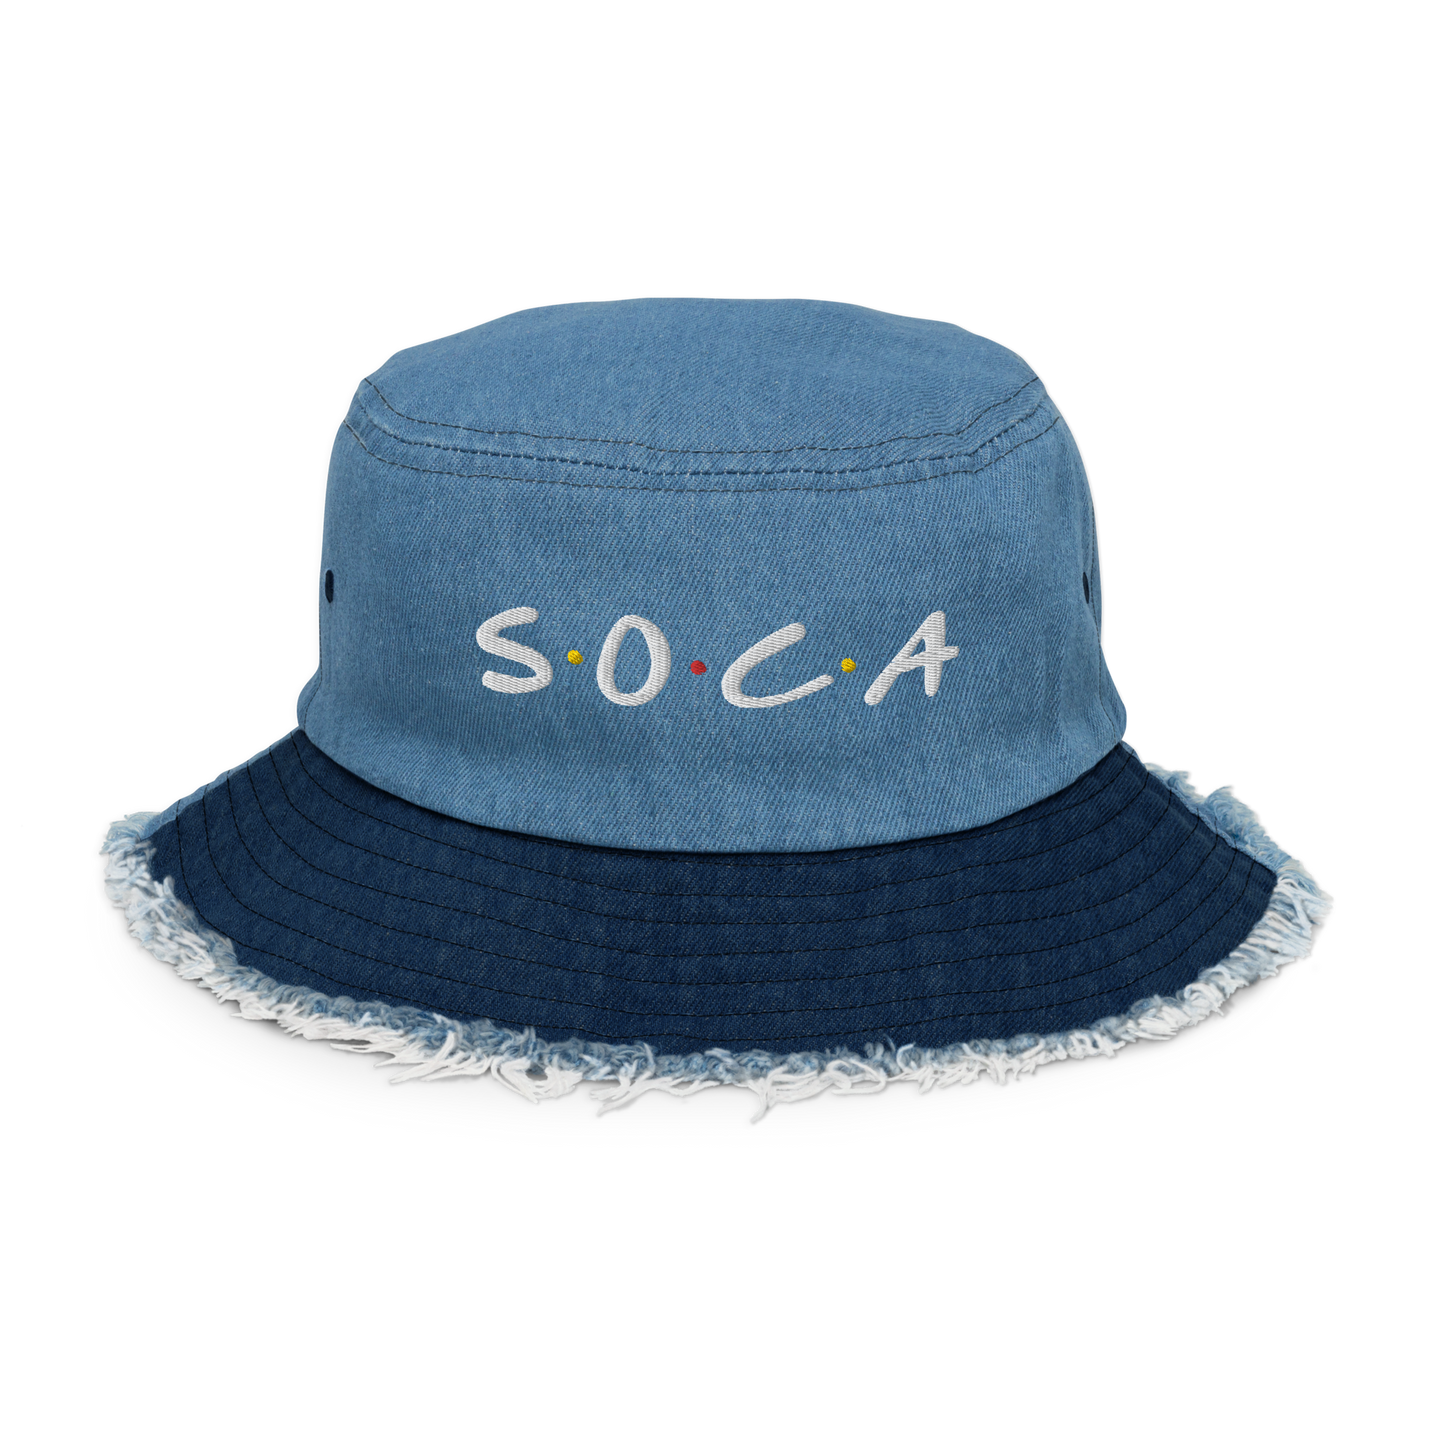 Soca Friends Distressed denim bucket hat